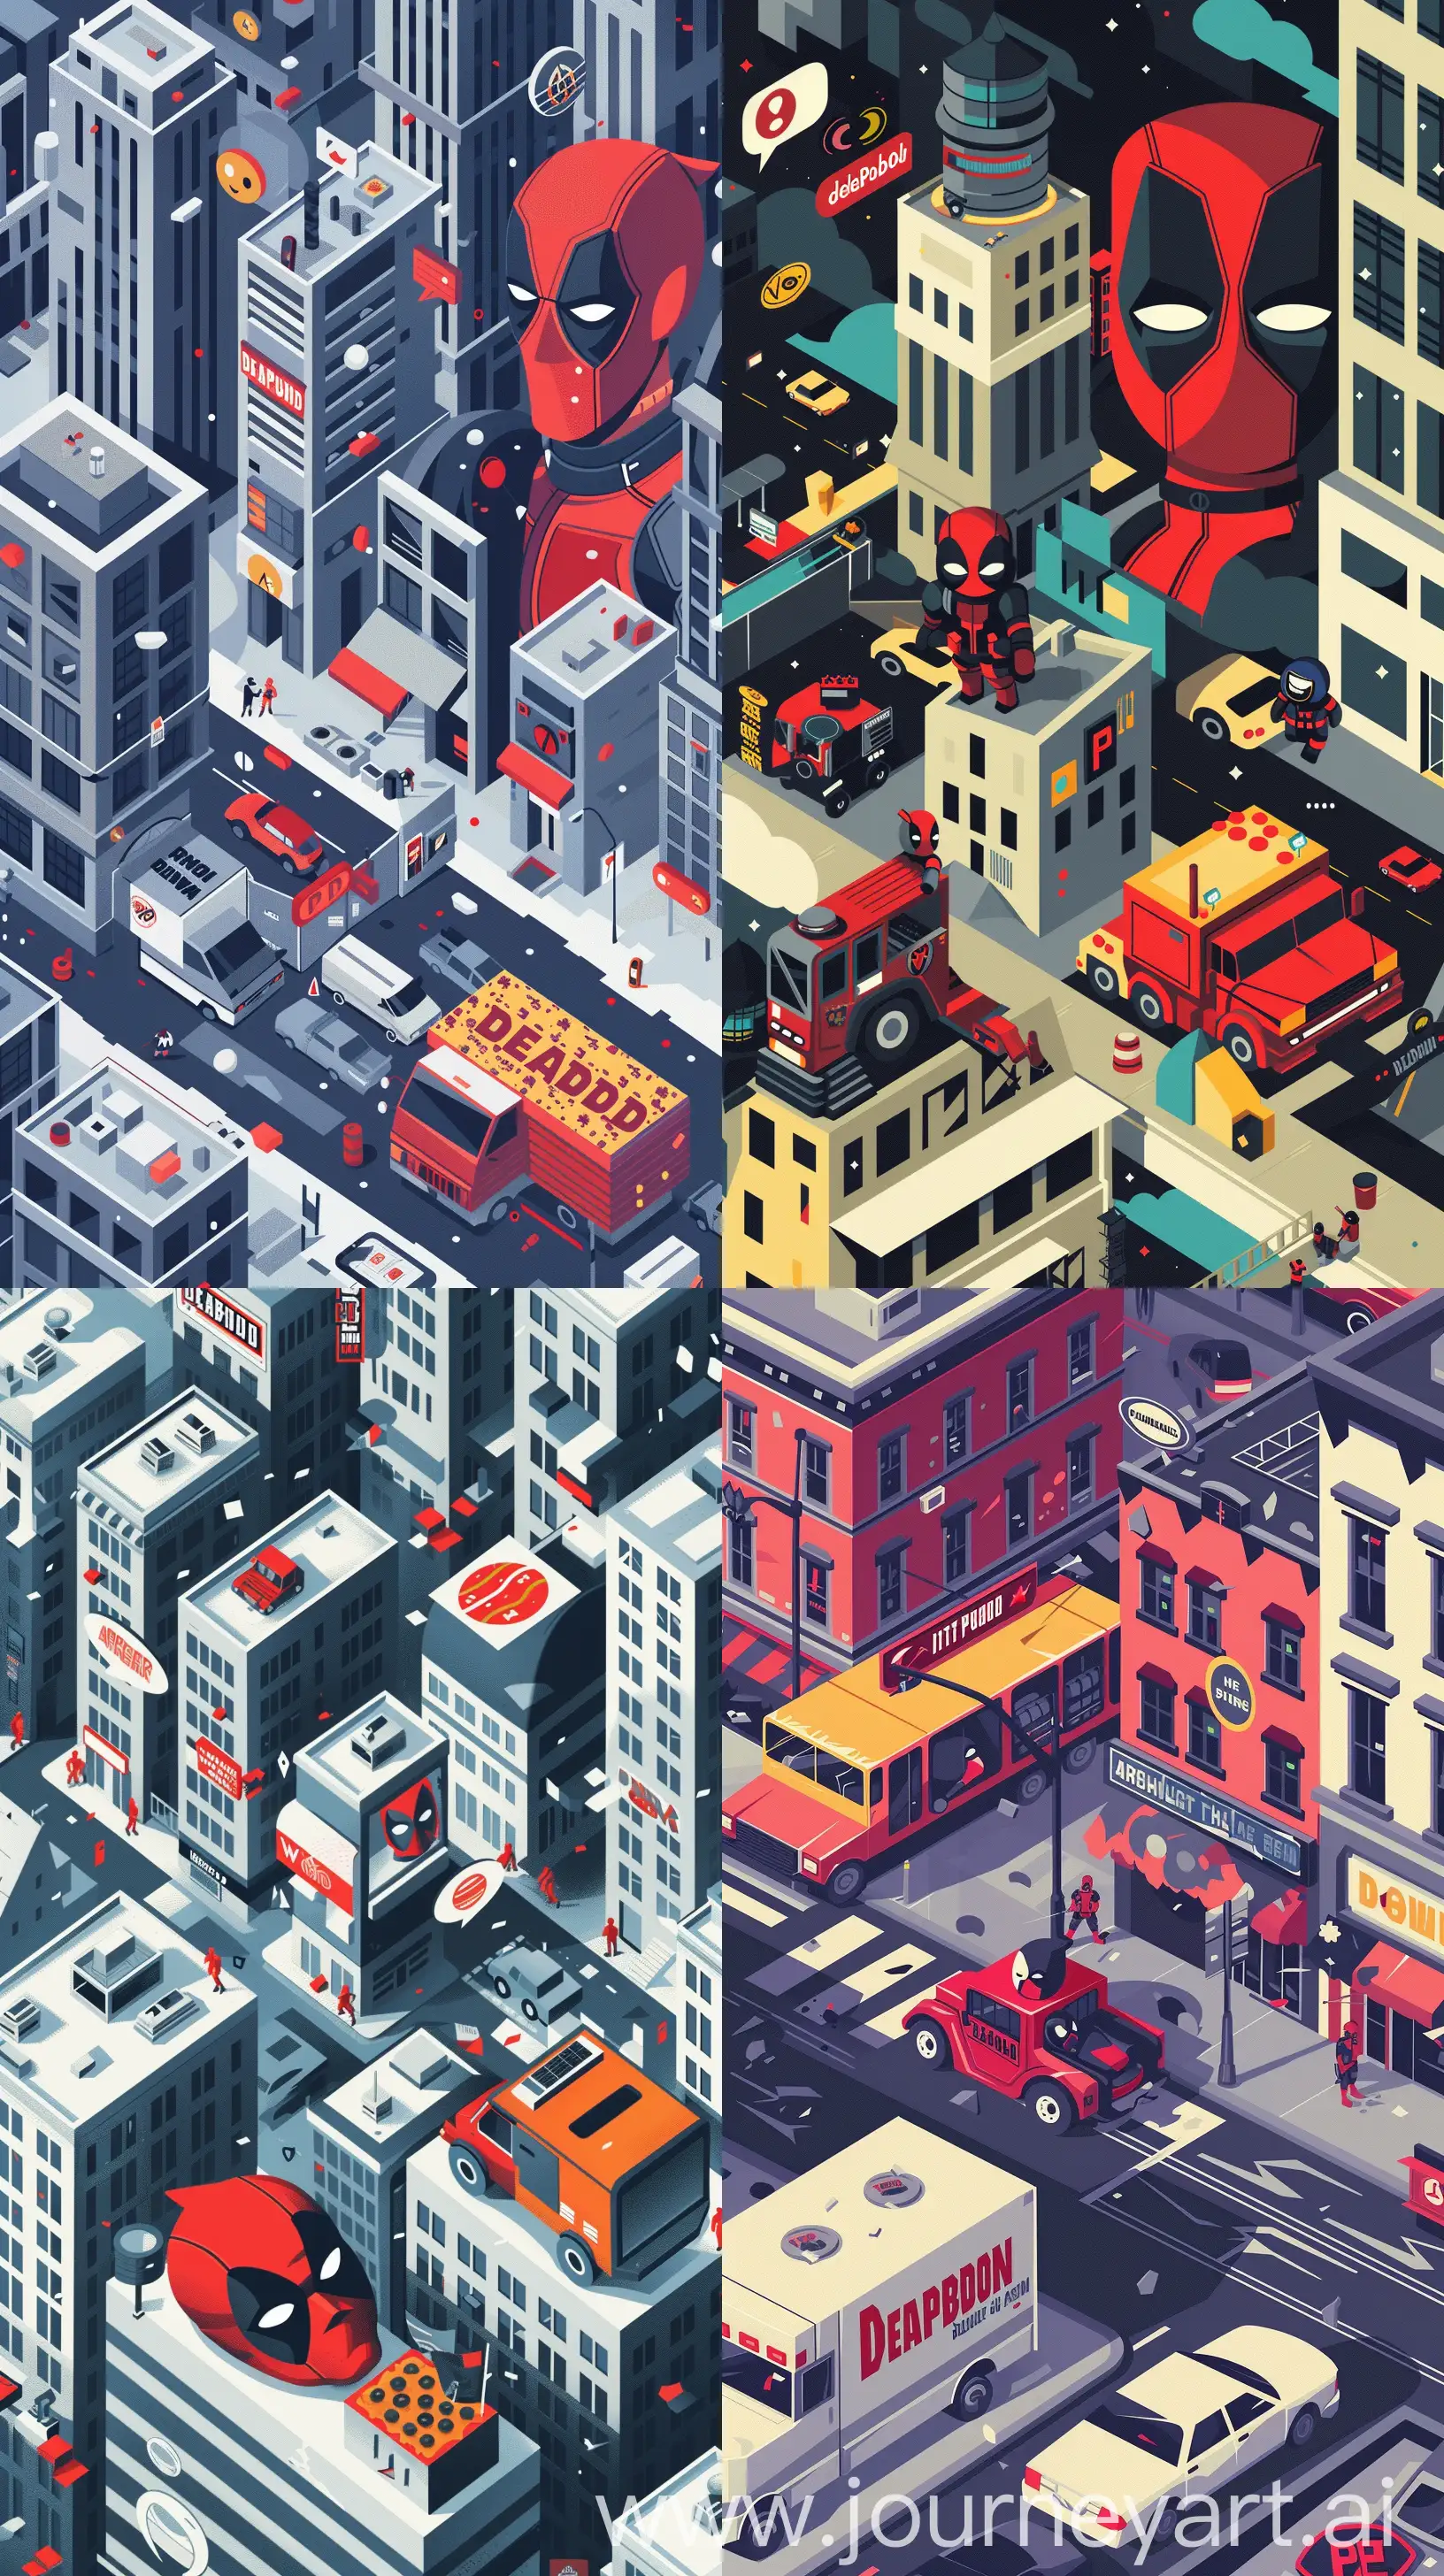 Dynamic-Deadpool-Cityscape-Wallpaper-Minimalist-Isometric-Design-with-Superhero-Elements